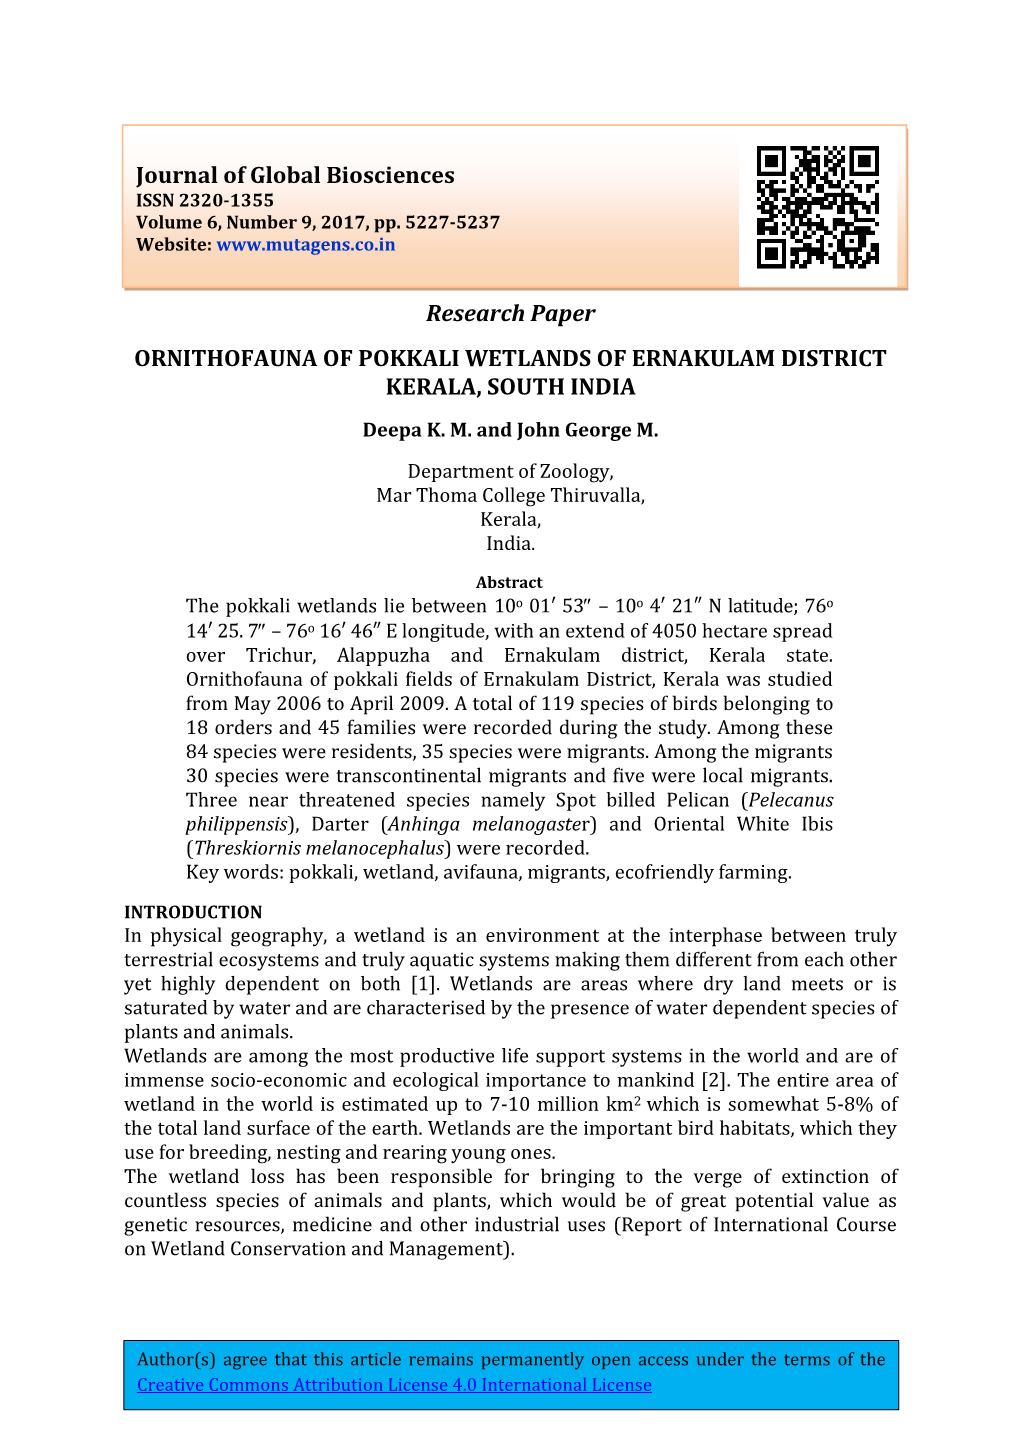 Research Paper ORNITHOFAUNA of POKKALI WETLANDS of ERNAKULAM DISTRICT KERALA, SOUTH INDIA